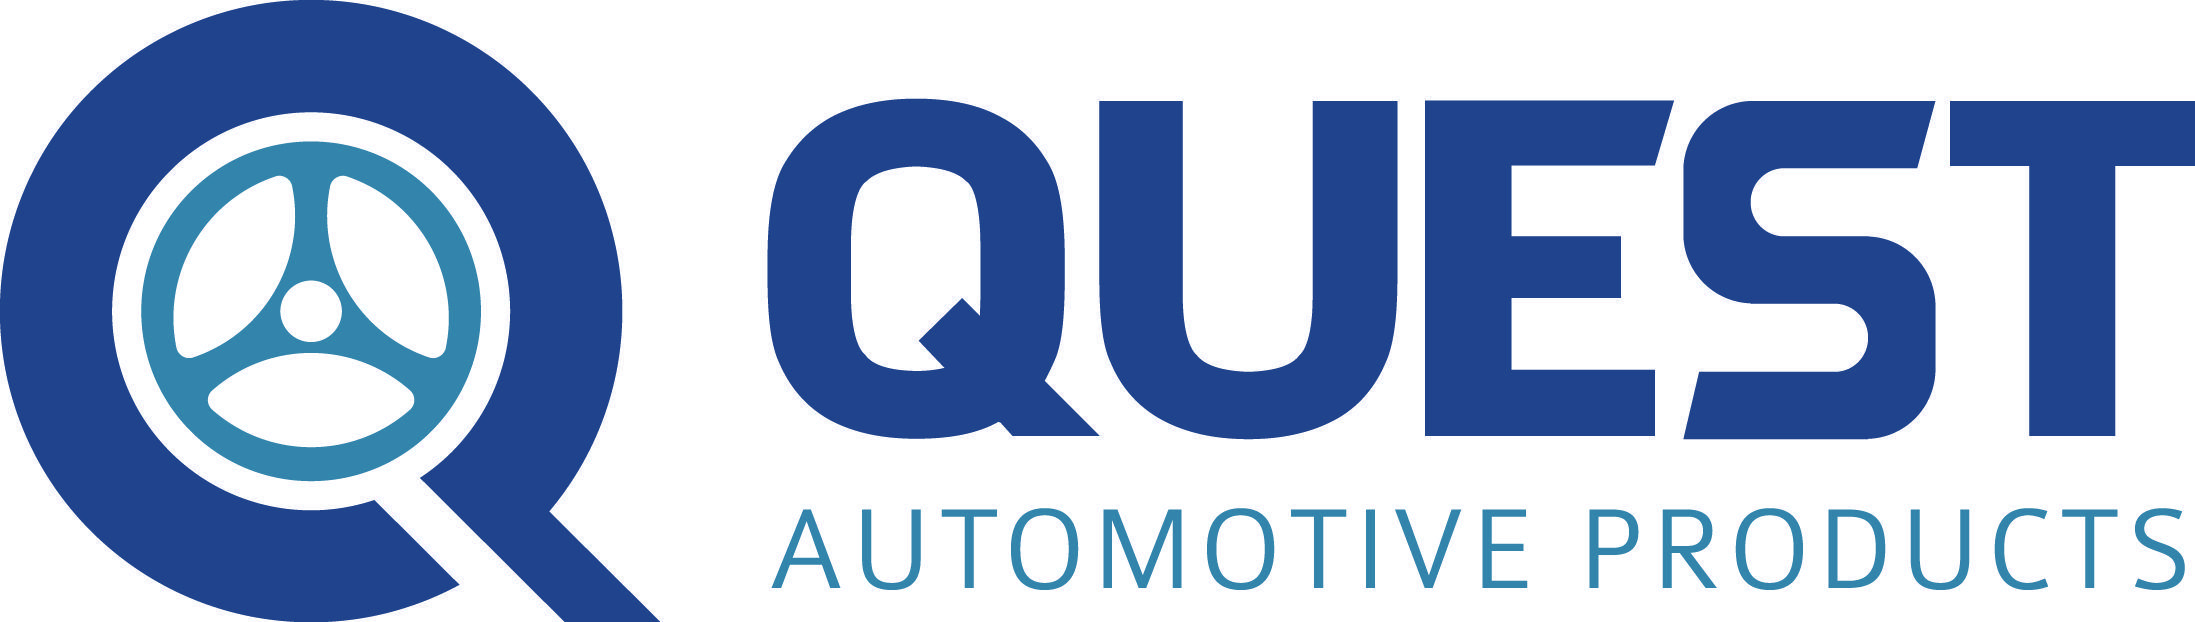 Automotive Products Logo - U.S. Chemical and Plastics Joins Matrix System in Automotive ...